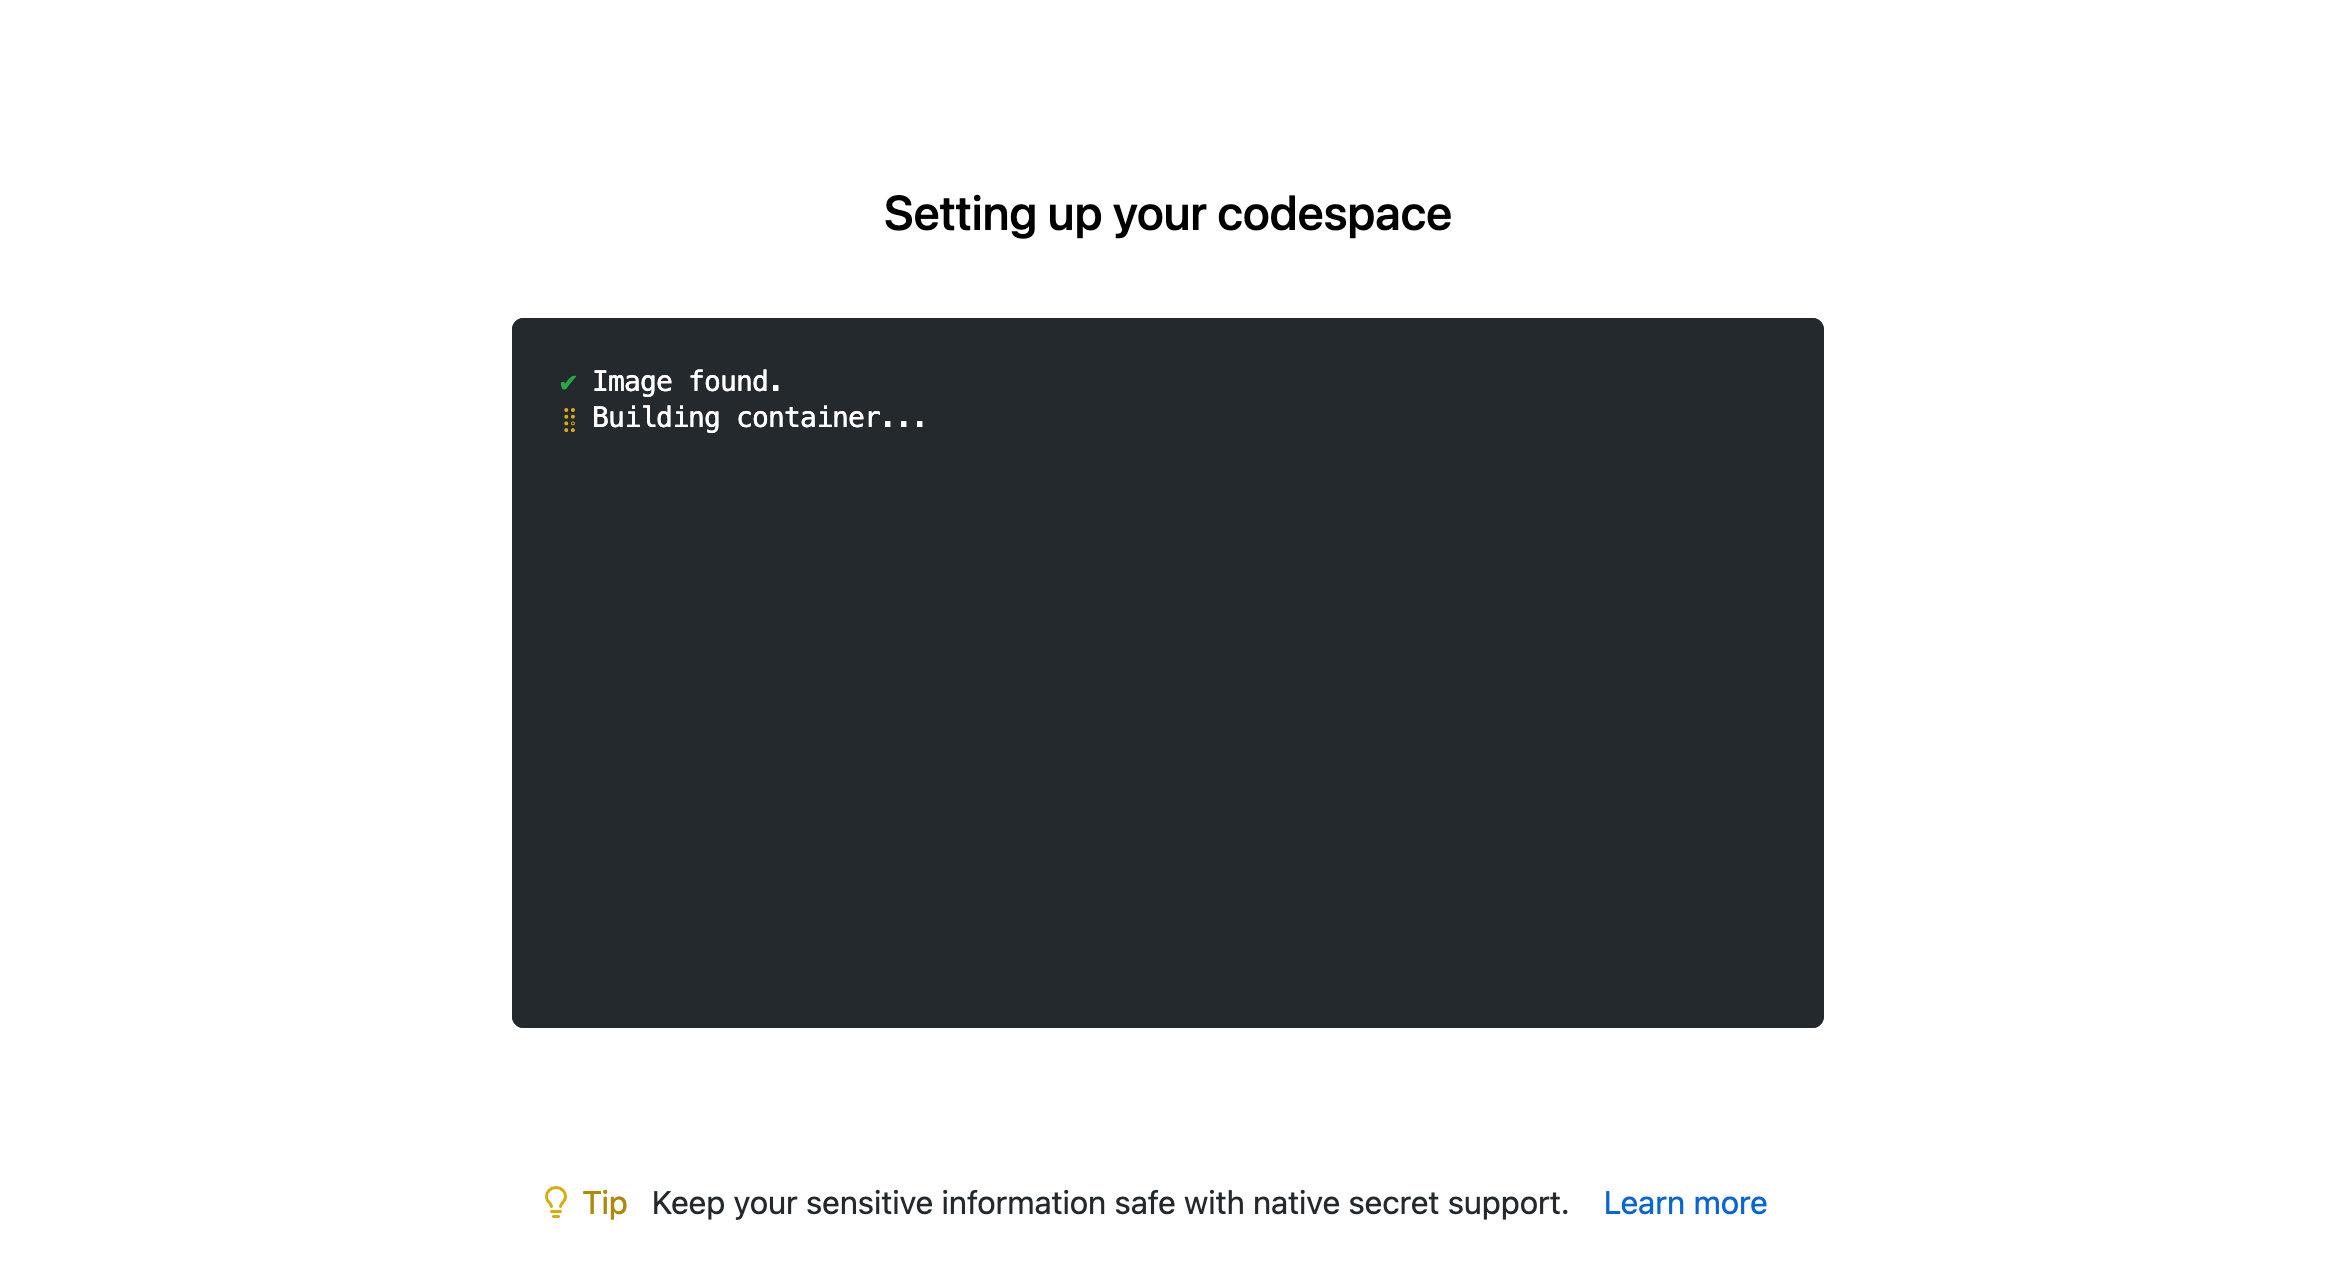 GitHub preparing your codespace